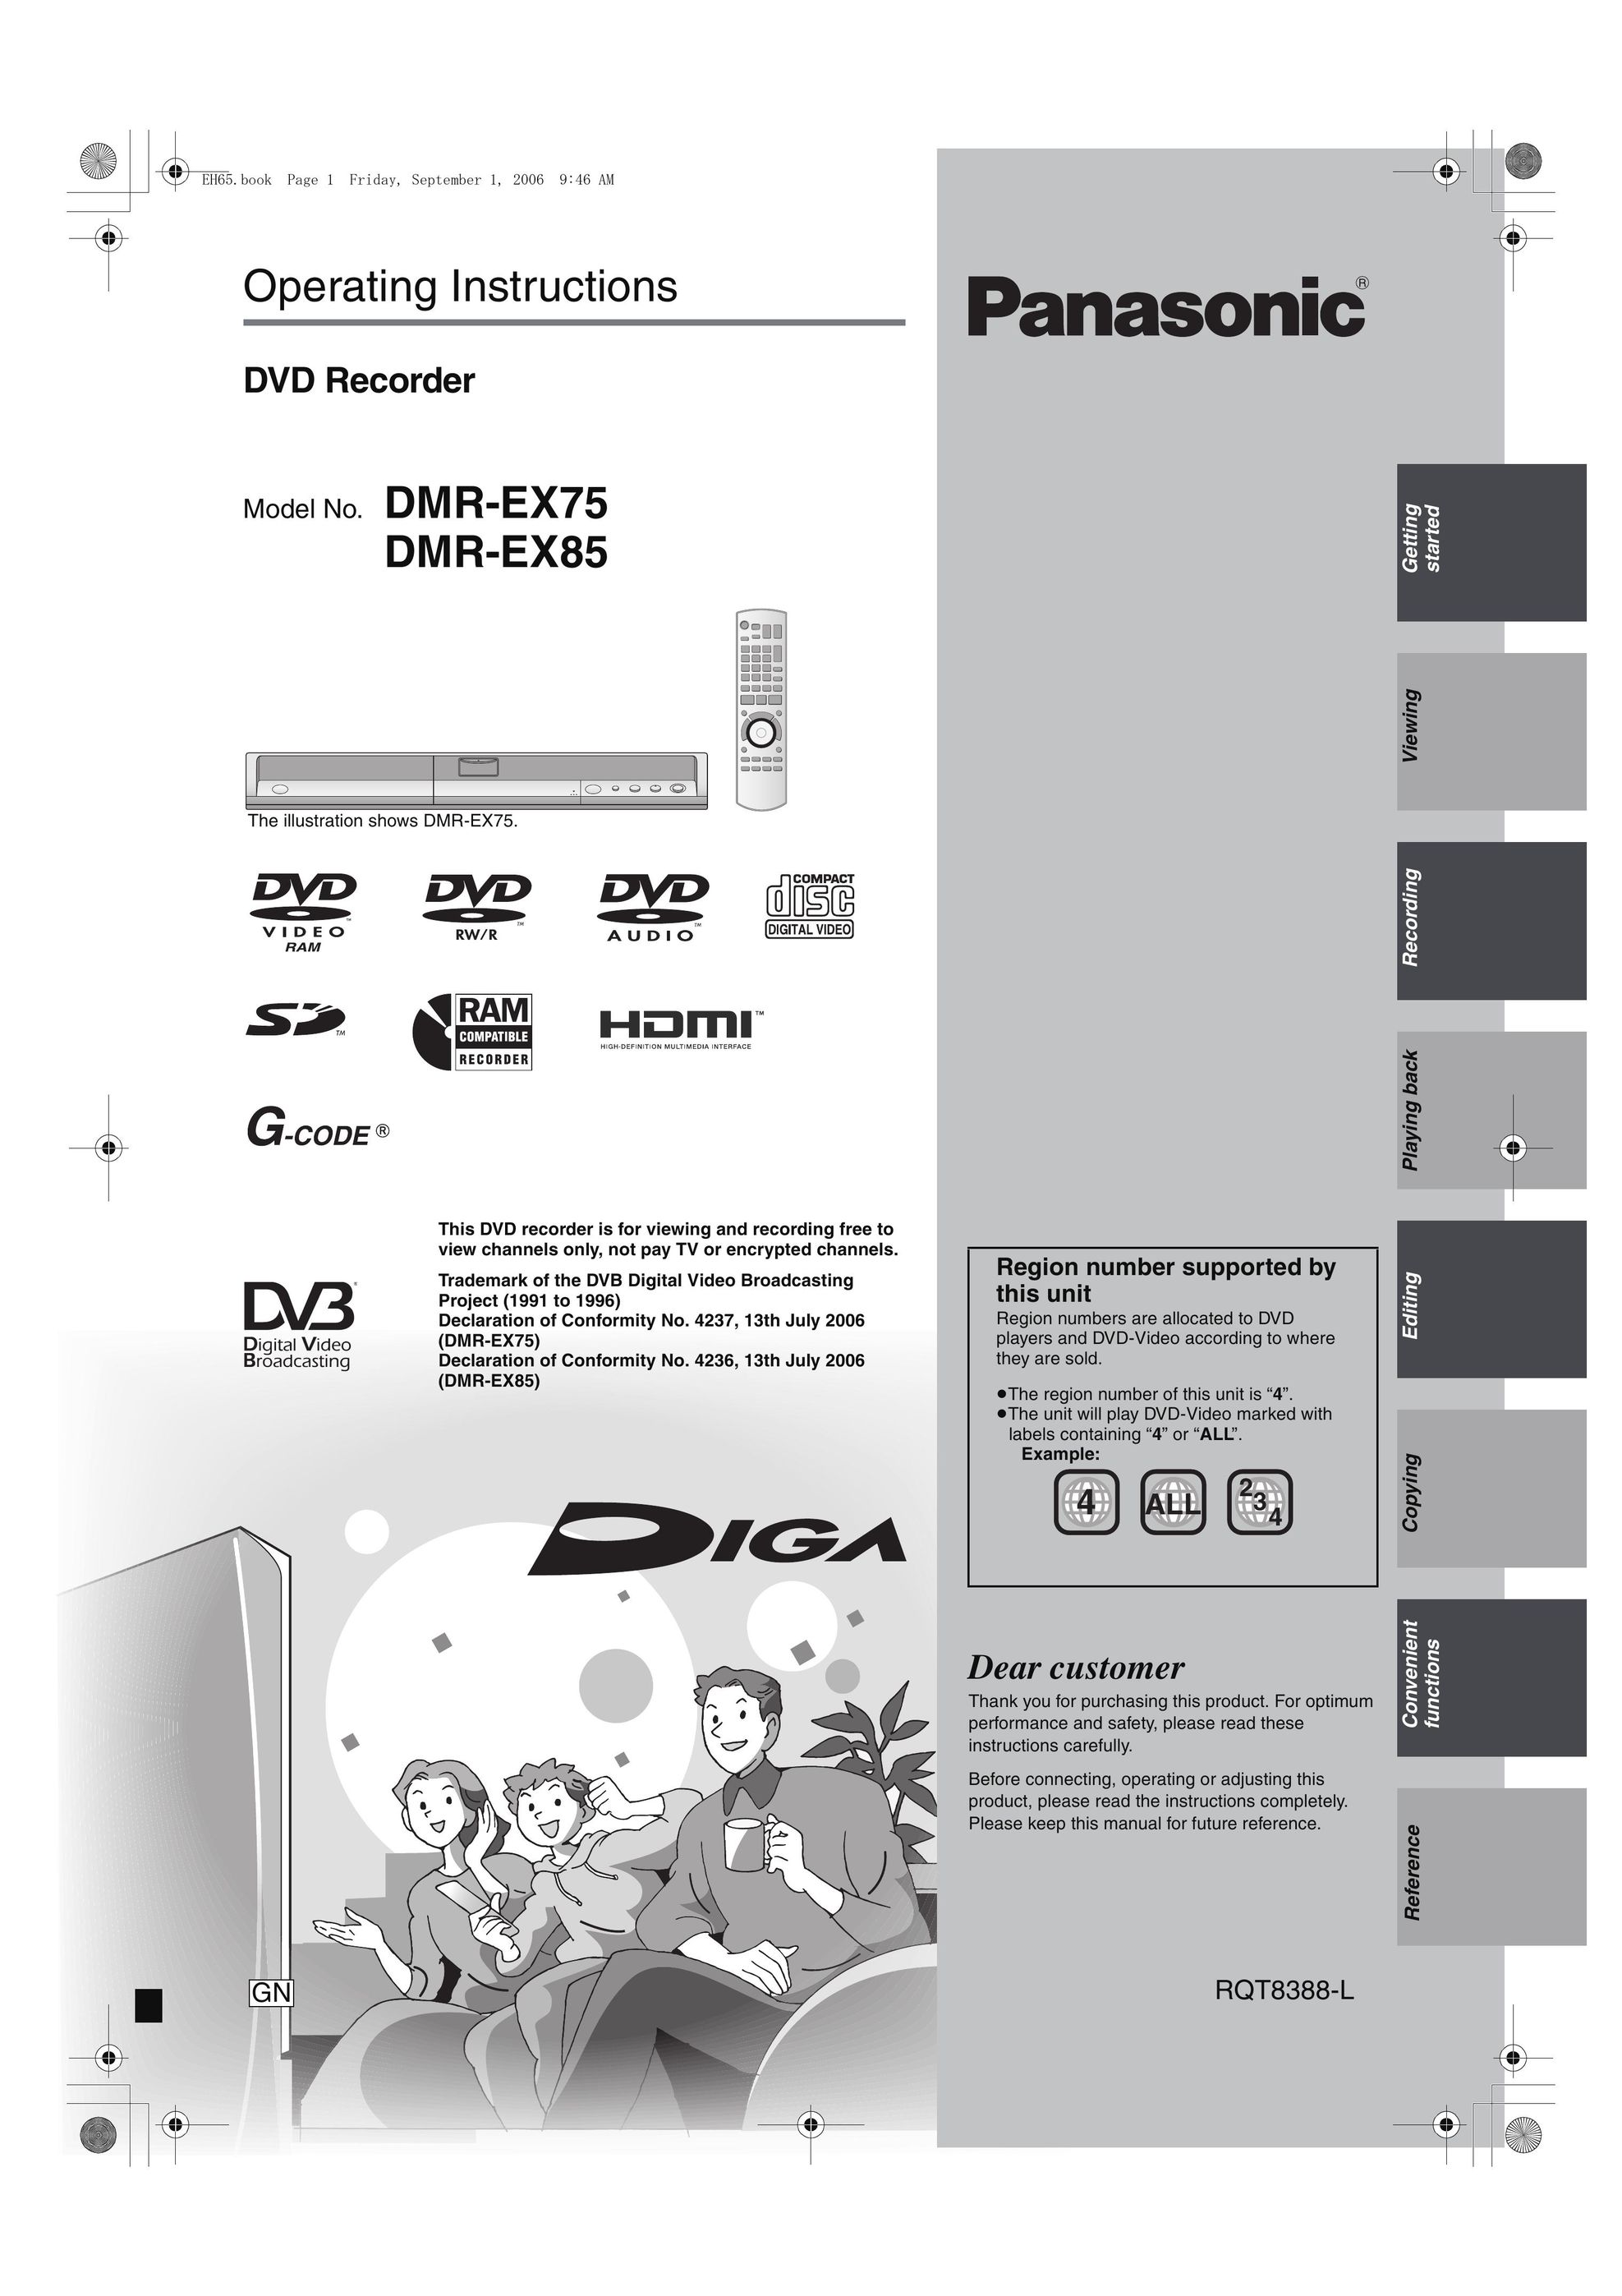 Panasonic DMR-EX75, DMR-EX85 DVR User Manual